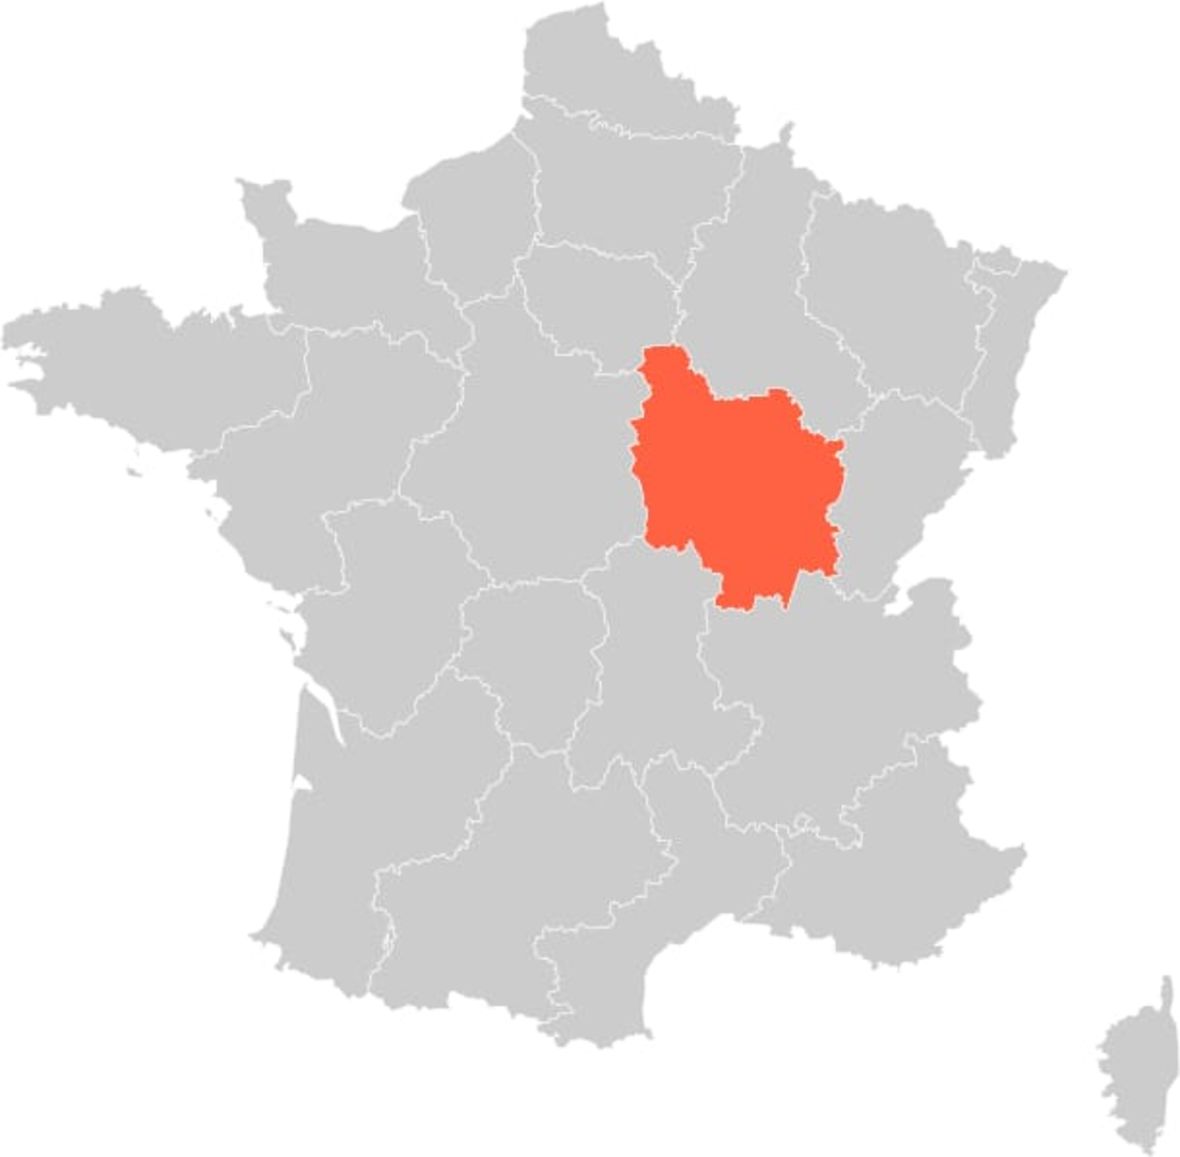 France Burgundy Region Map